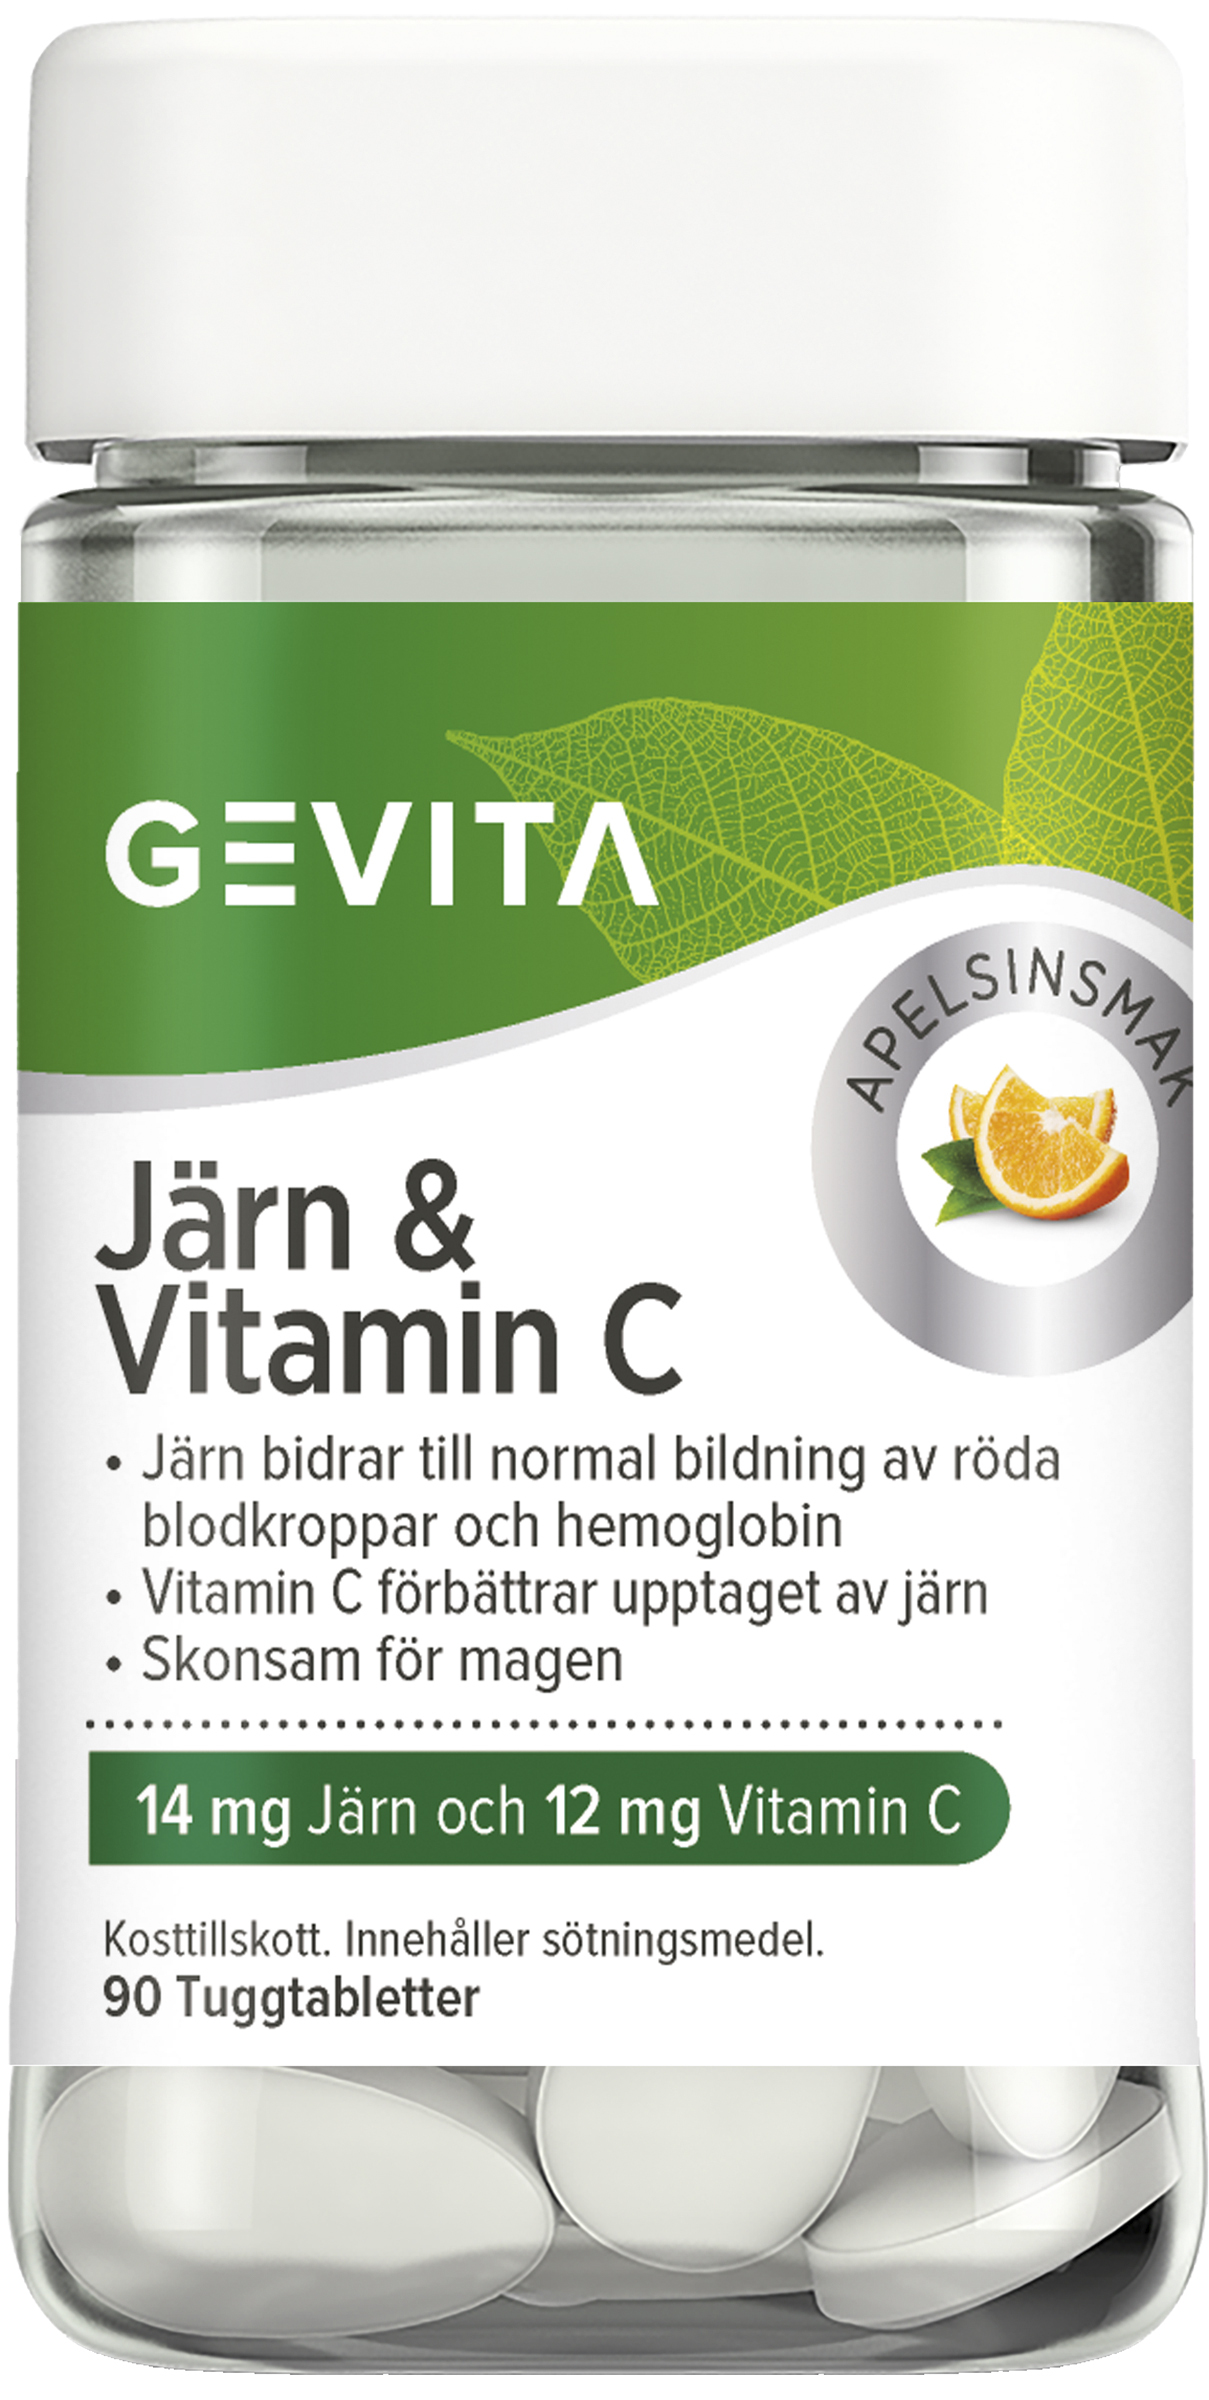 Gevita Järn & Vitamin C 90 st